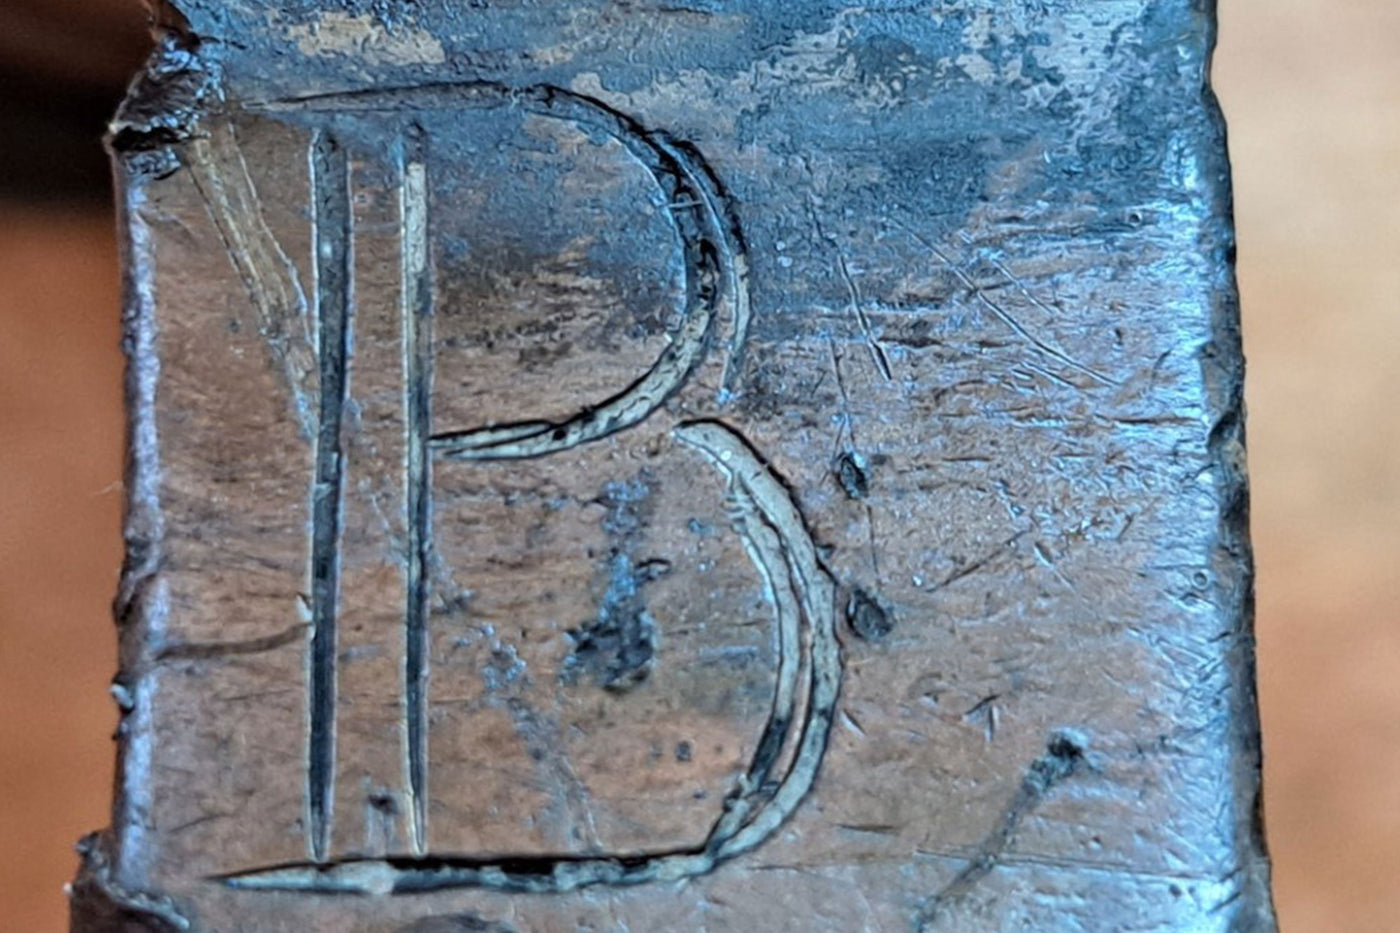 Letter B engraved on a metal pewter tavern mug handle